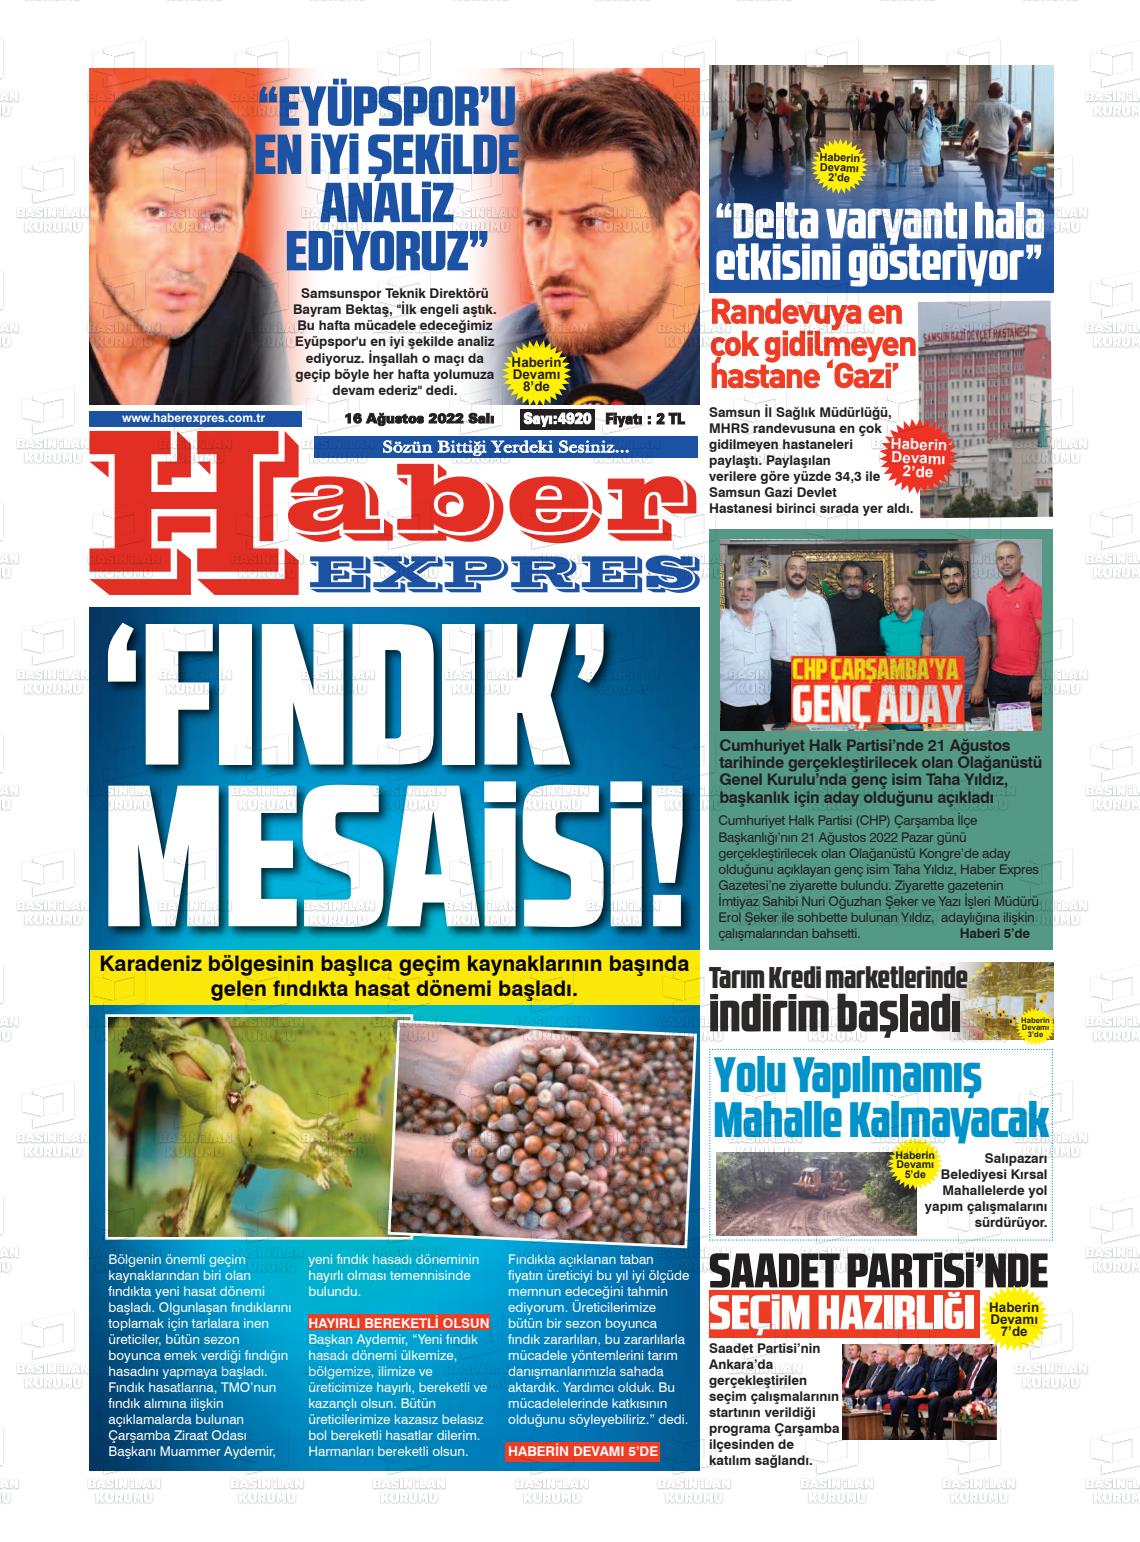 16 Ağustos 2022 Haber Expres Gazete Manşeti